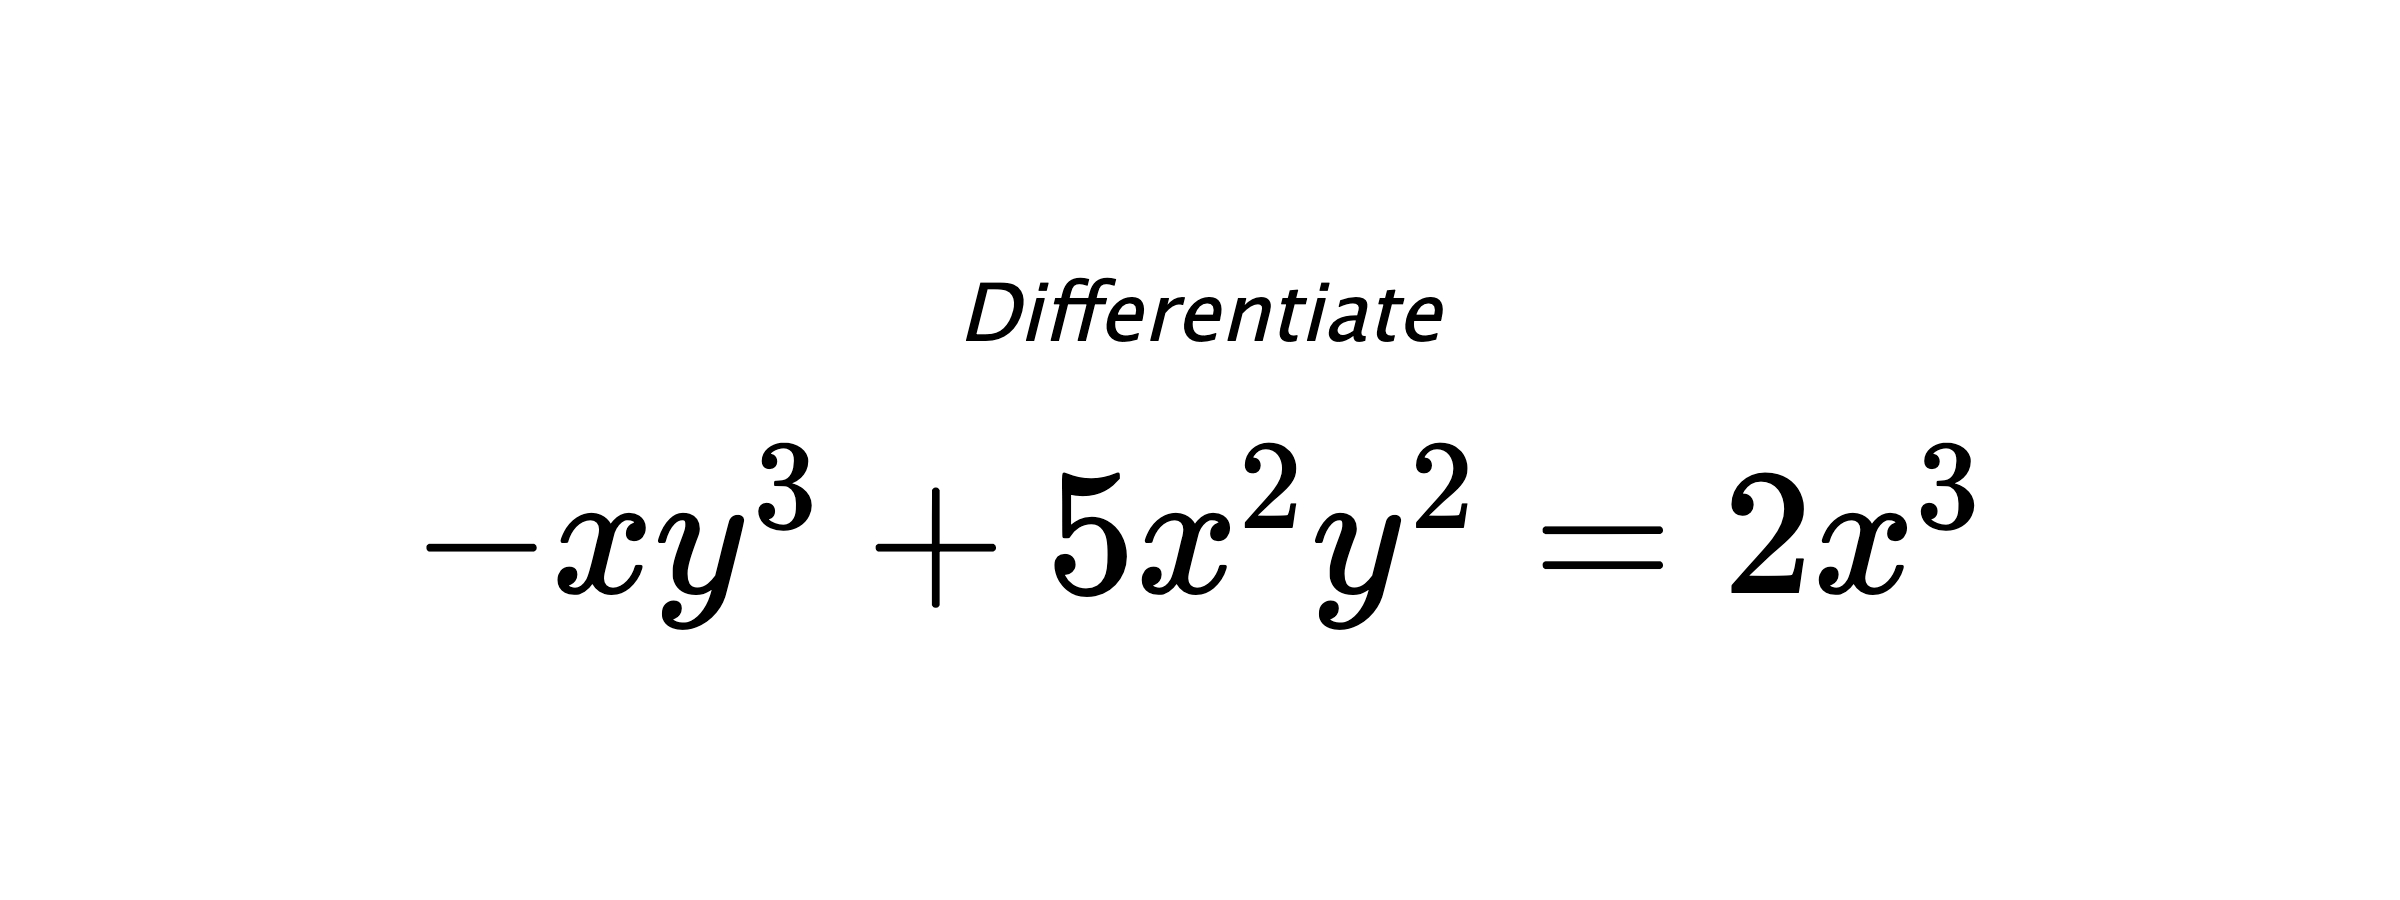 Differentiate $ -xy^3+5x^2y^2 = 2x^3 $